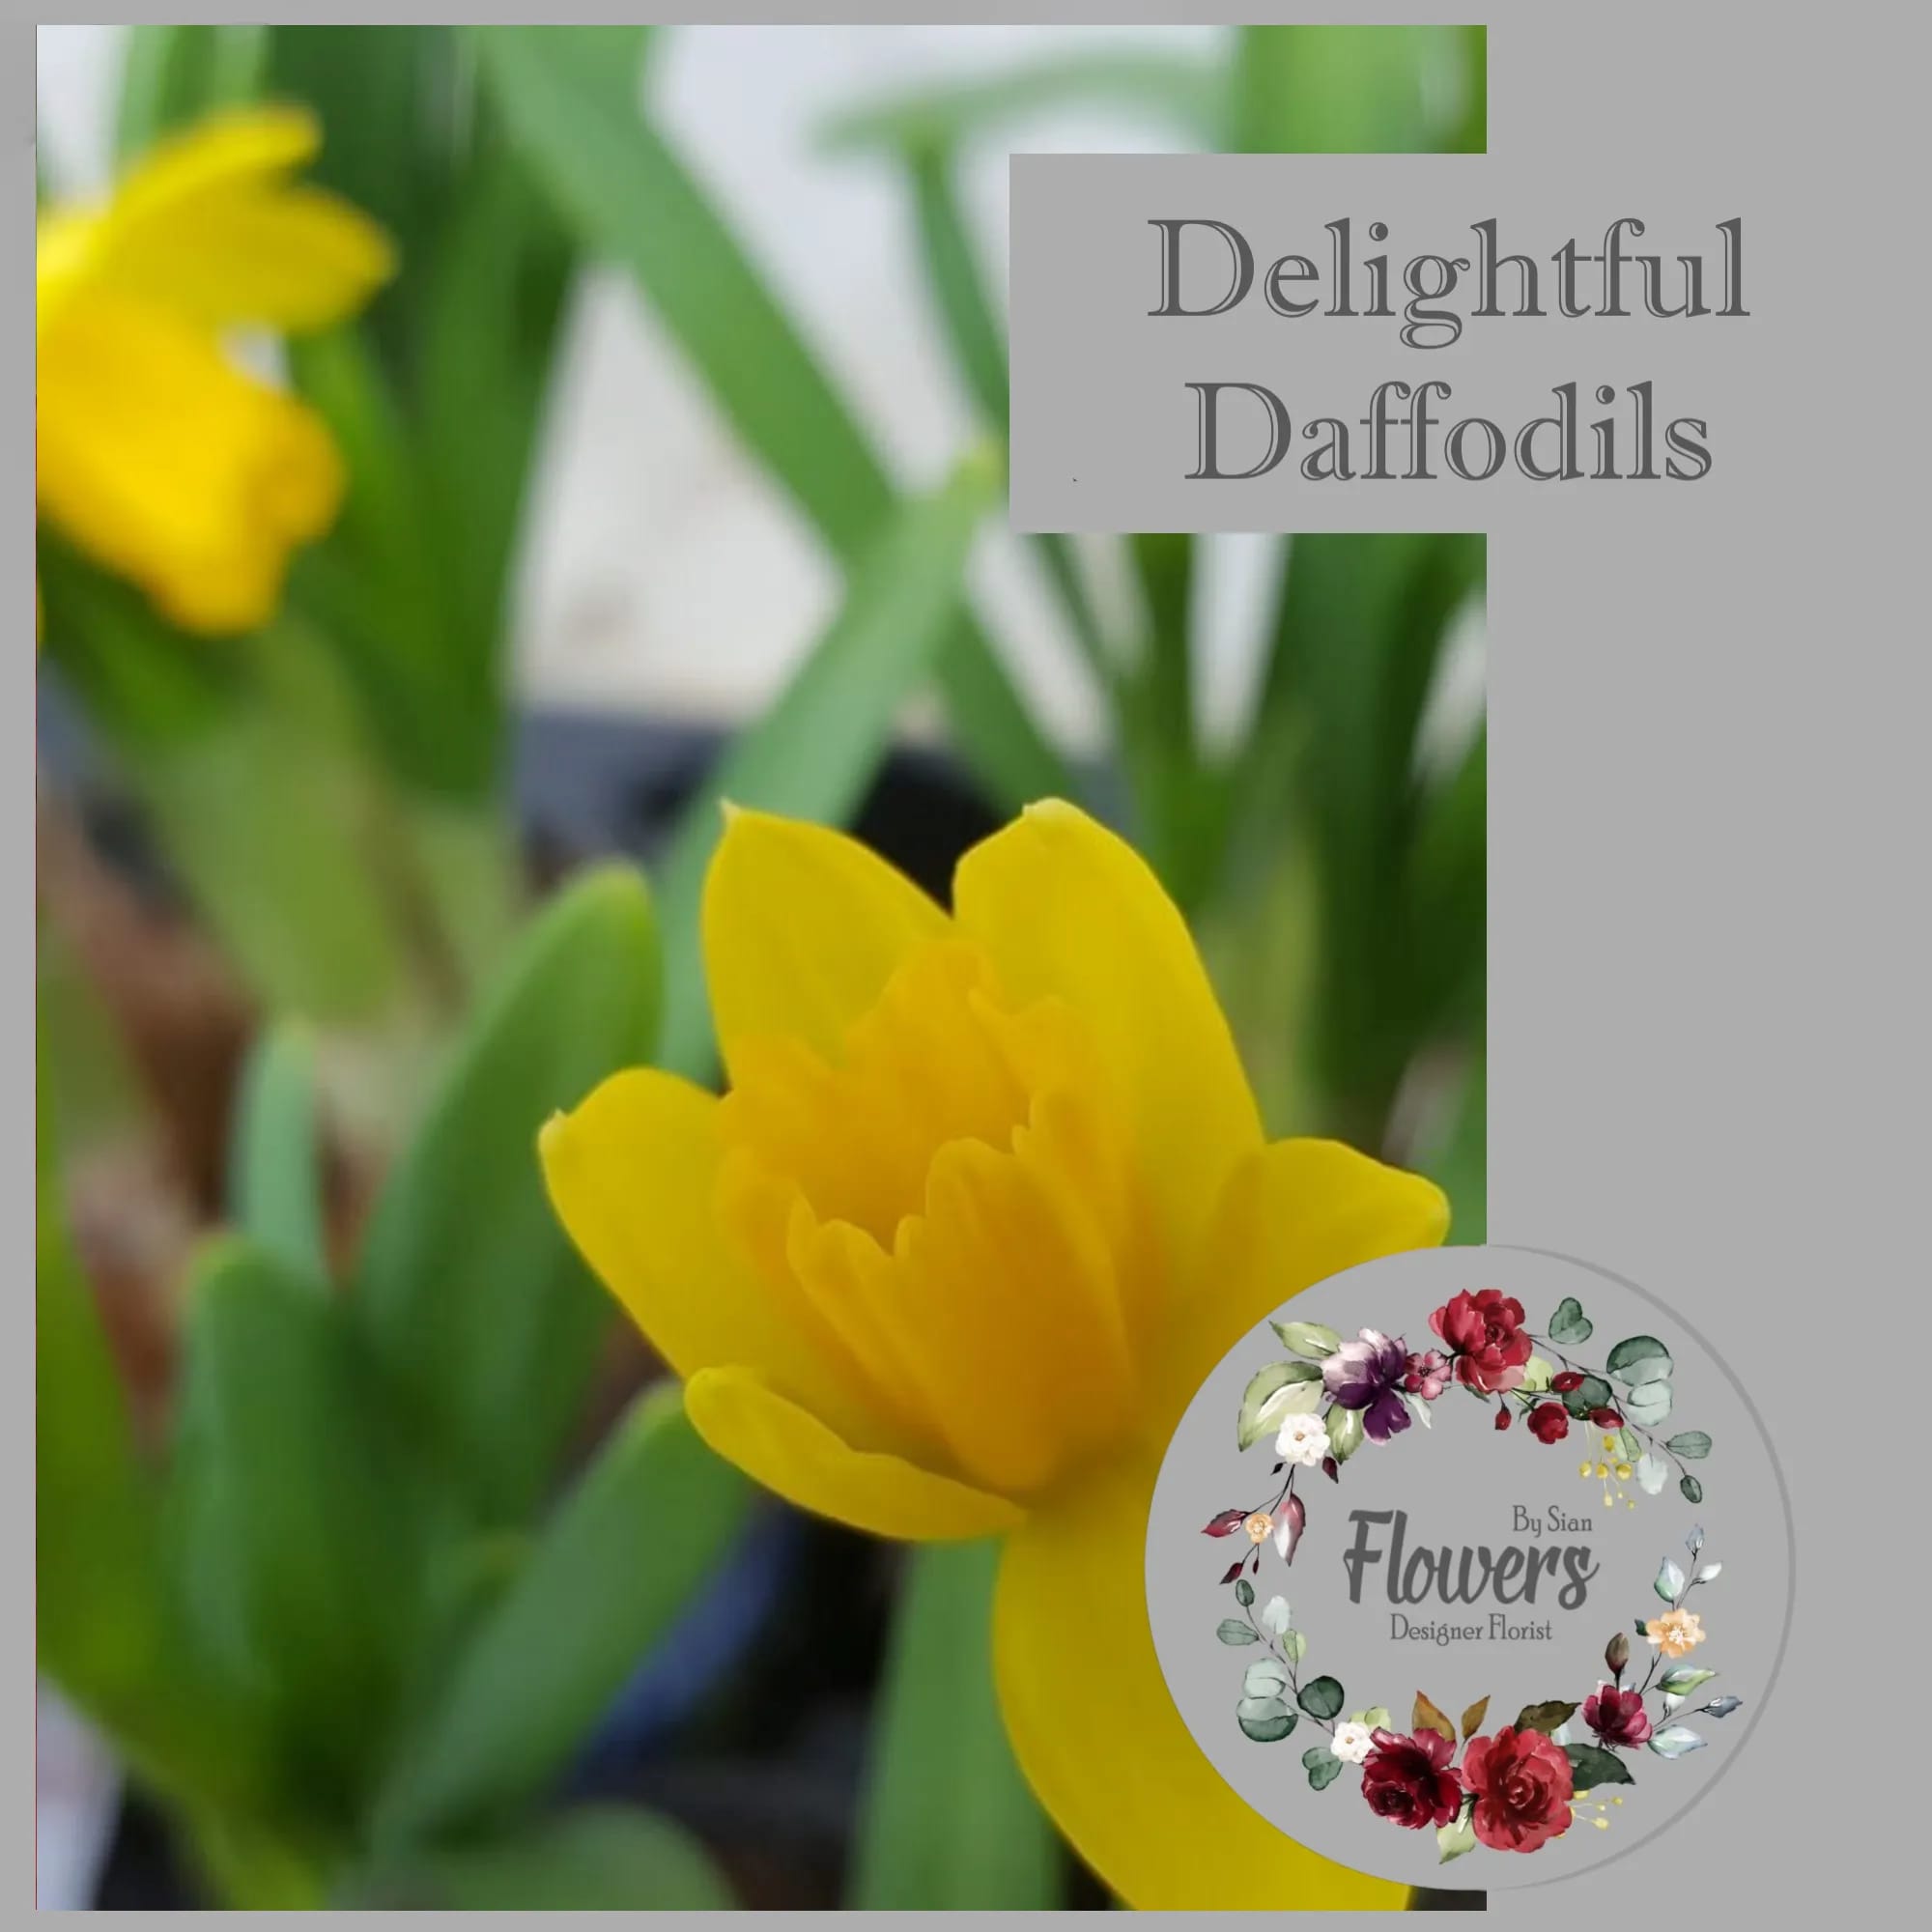 daffodils Swansea